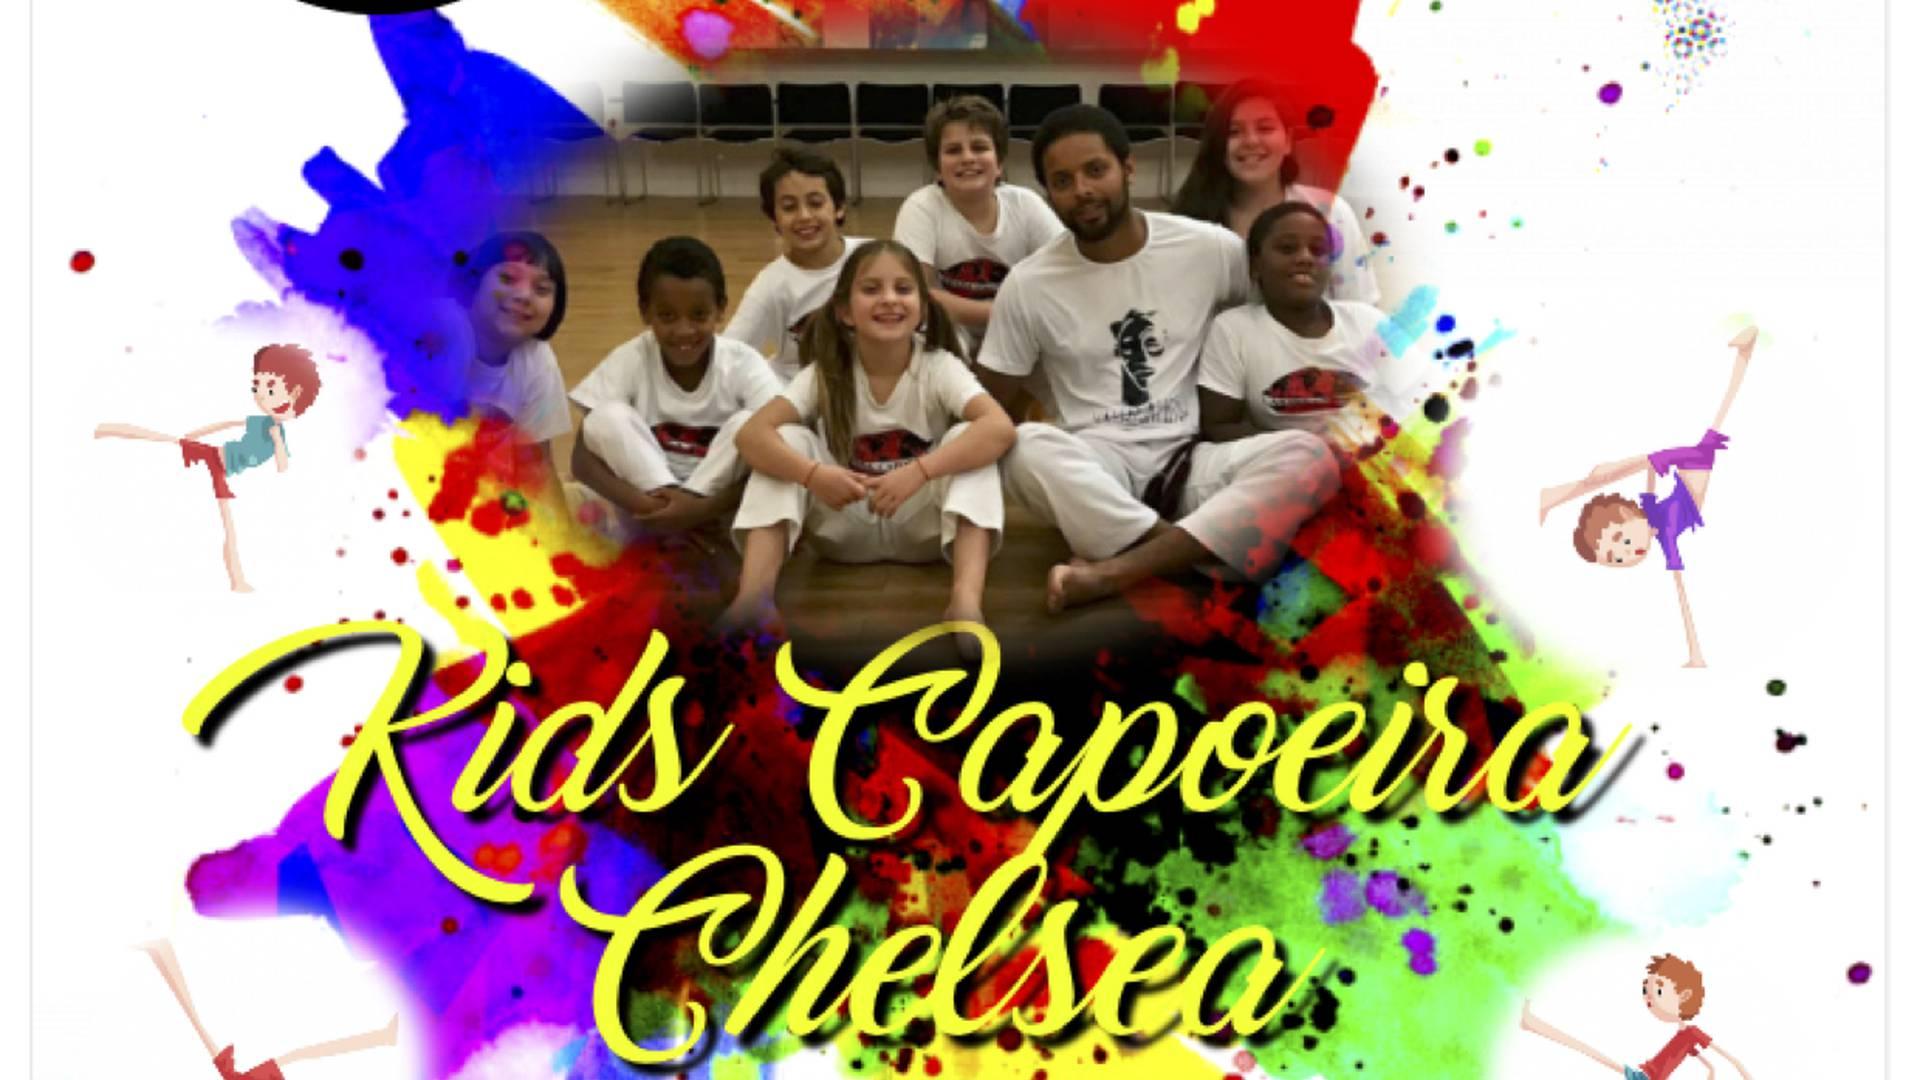 Kids Capoeira Chelsea photo